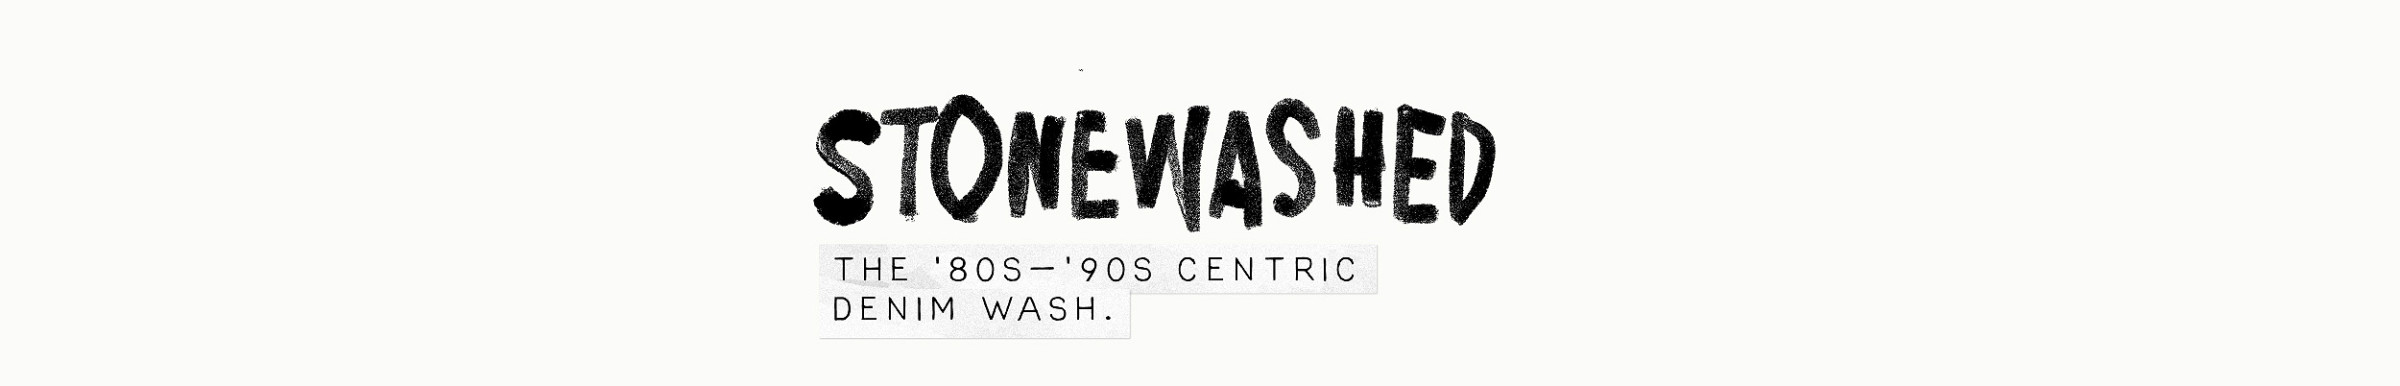 2 stonewashed the ‘80s–’90s centric denim wash.